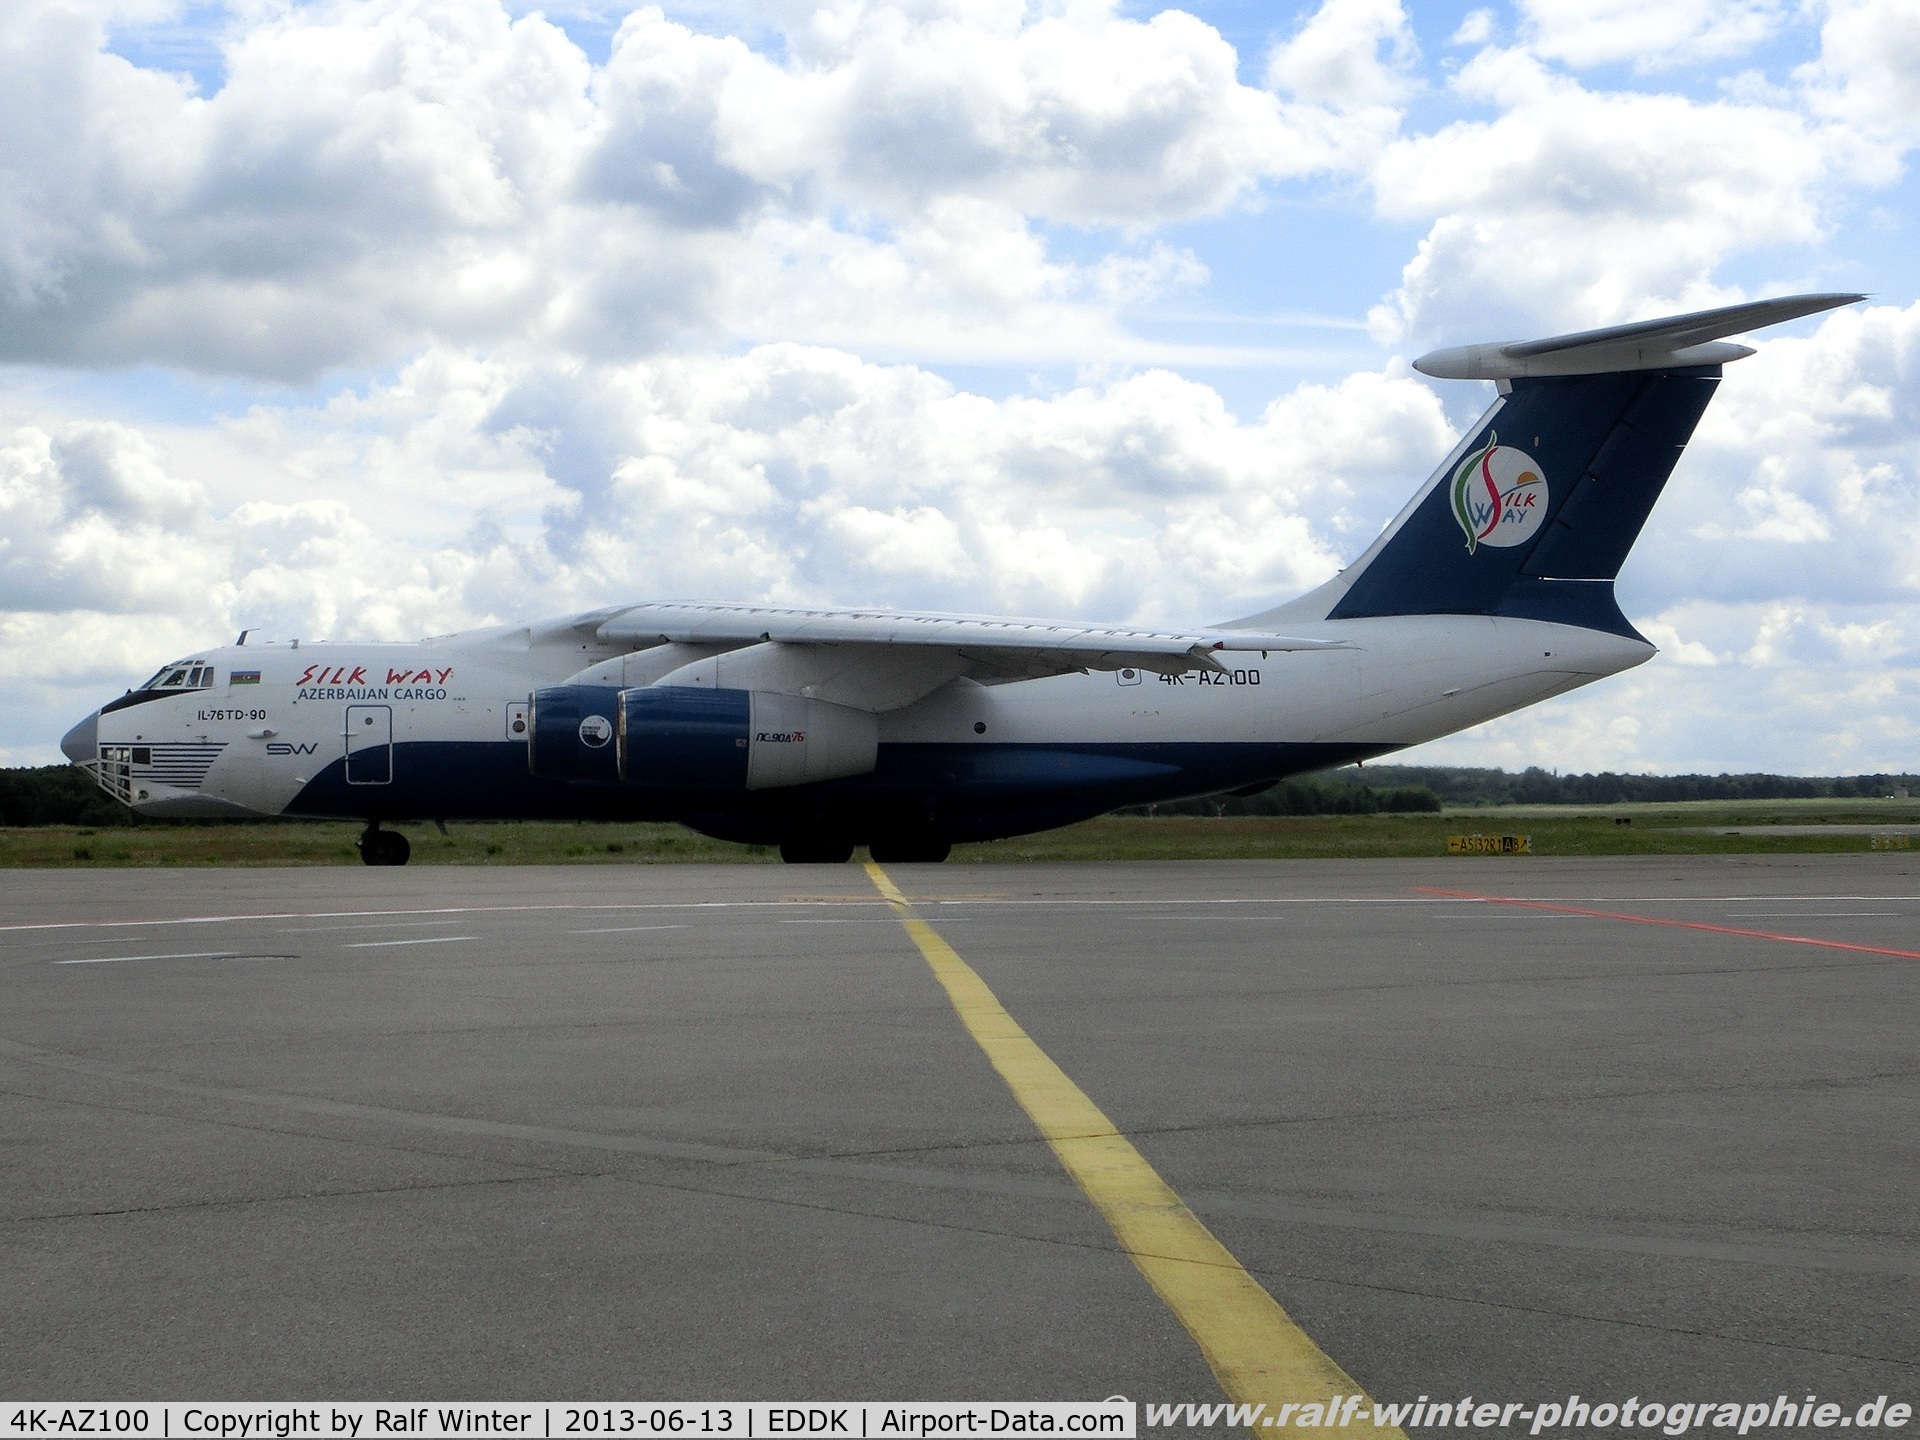 4K-AZ100, Ilyushin Il-76TD-90VD C/N 2073421708, Ilyushin Il-76TD-90SW - Silk Way Airlines - 4K-AZ100 - 14.06.2013 - CGN